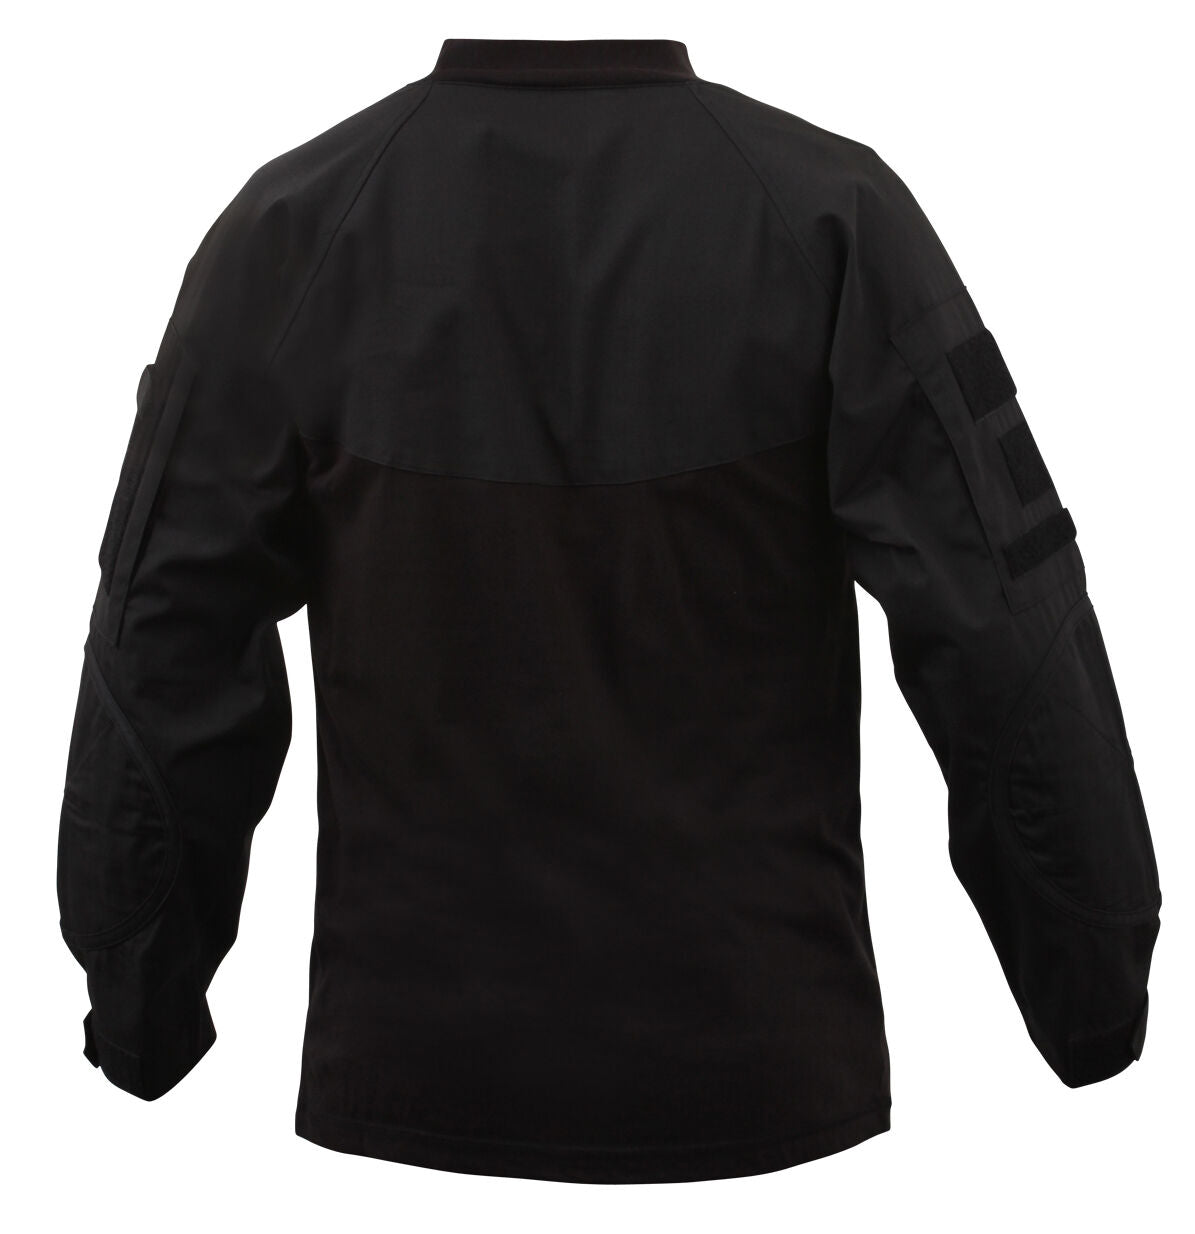 Rothco Military NYCO FR Fire Retardant Combat Shirt - Black